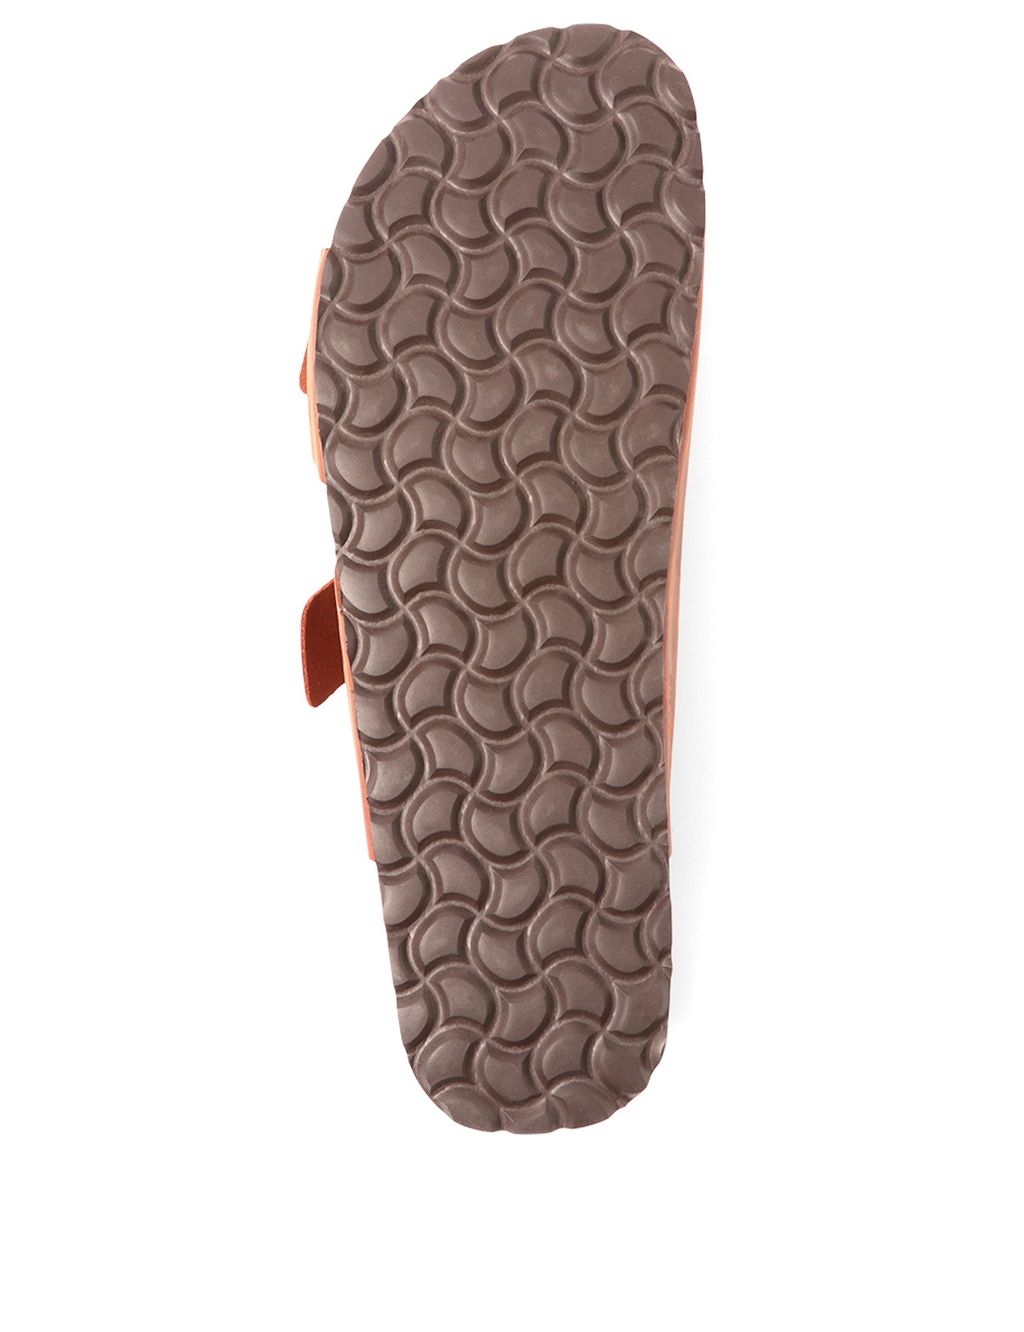 Leather Slip-On Sandals image 5